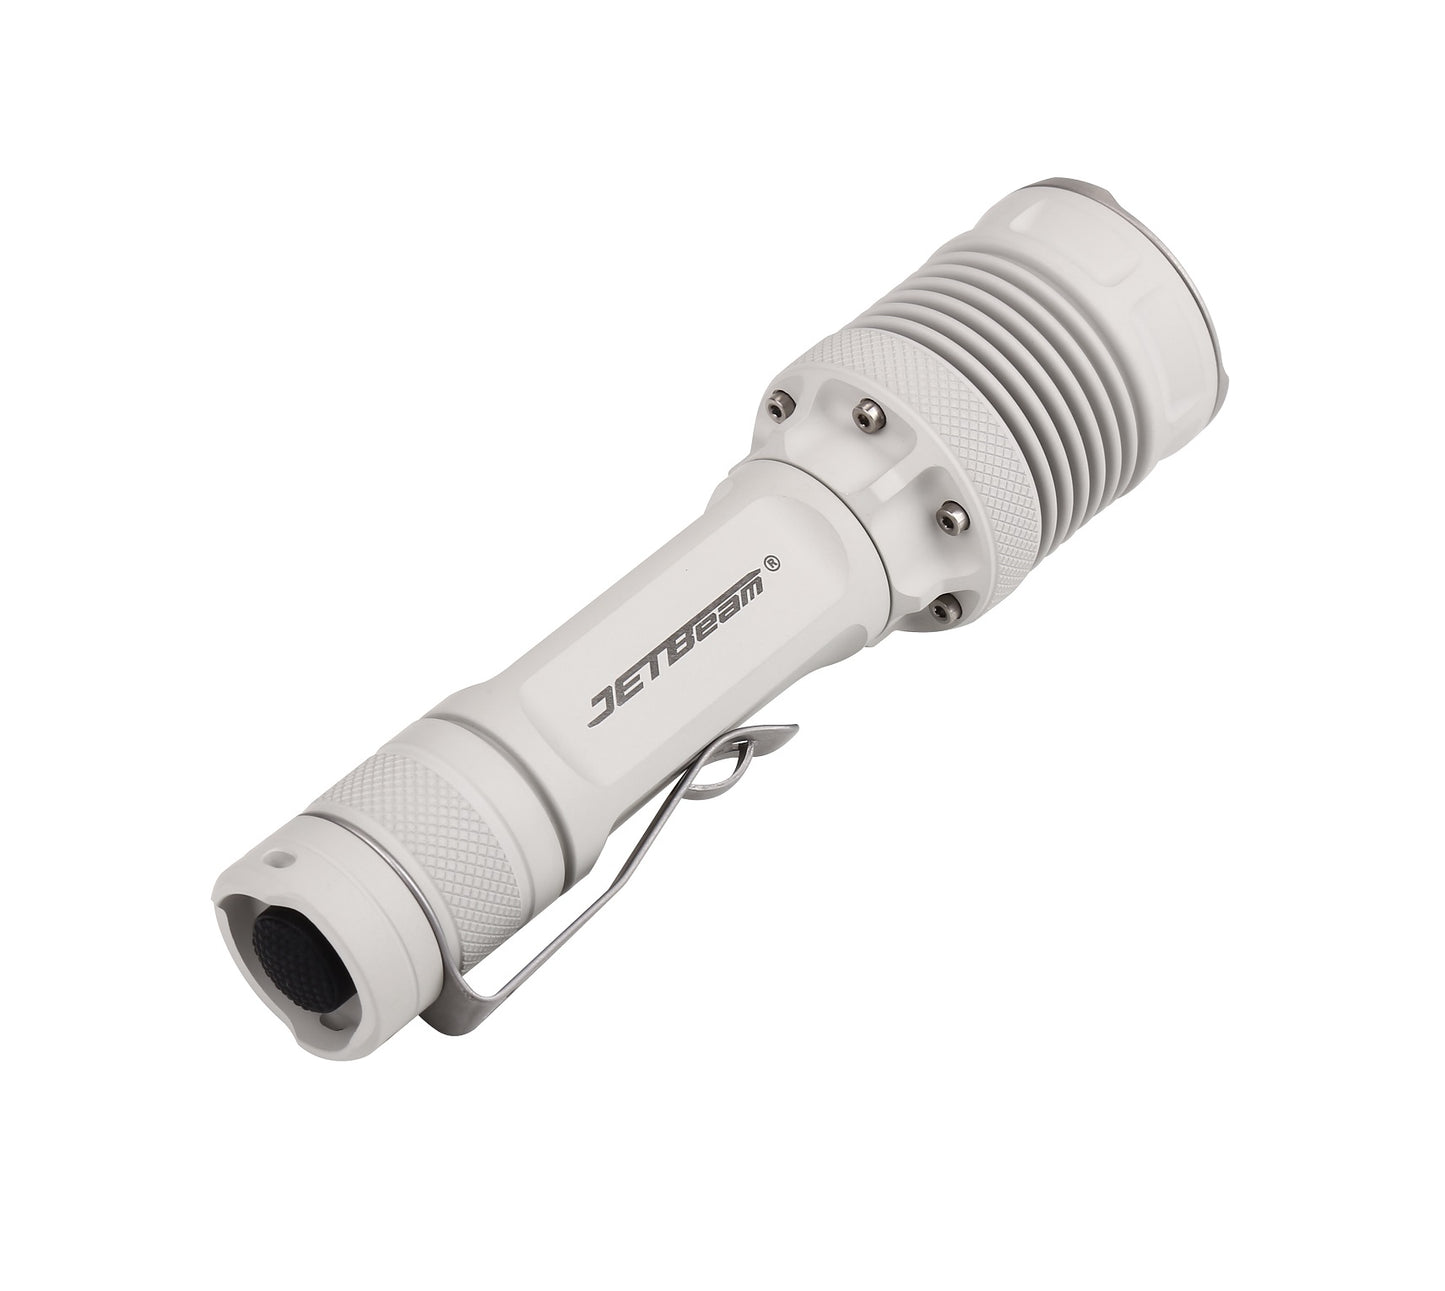 New Jetbeam M37 White USB Charge 3000 Lumens LED Flashlight Torch